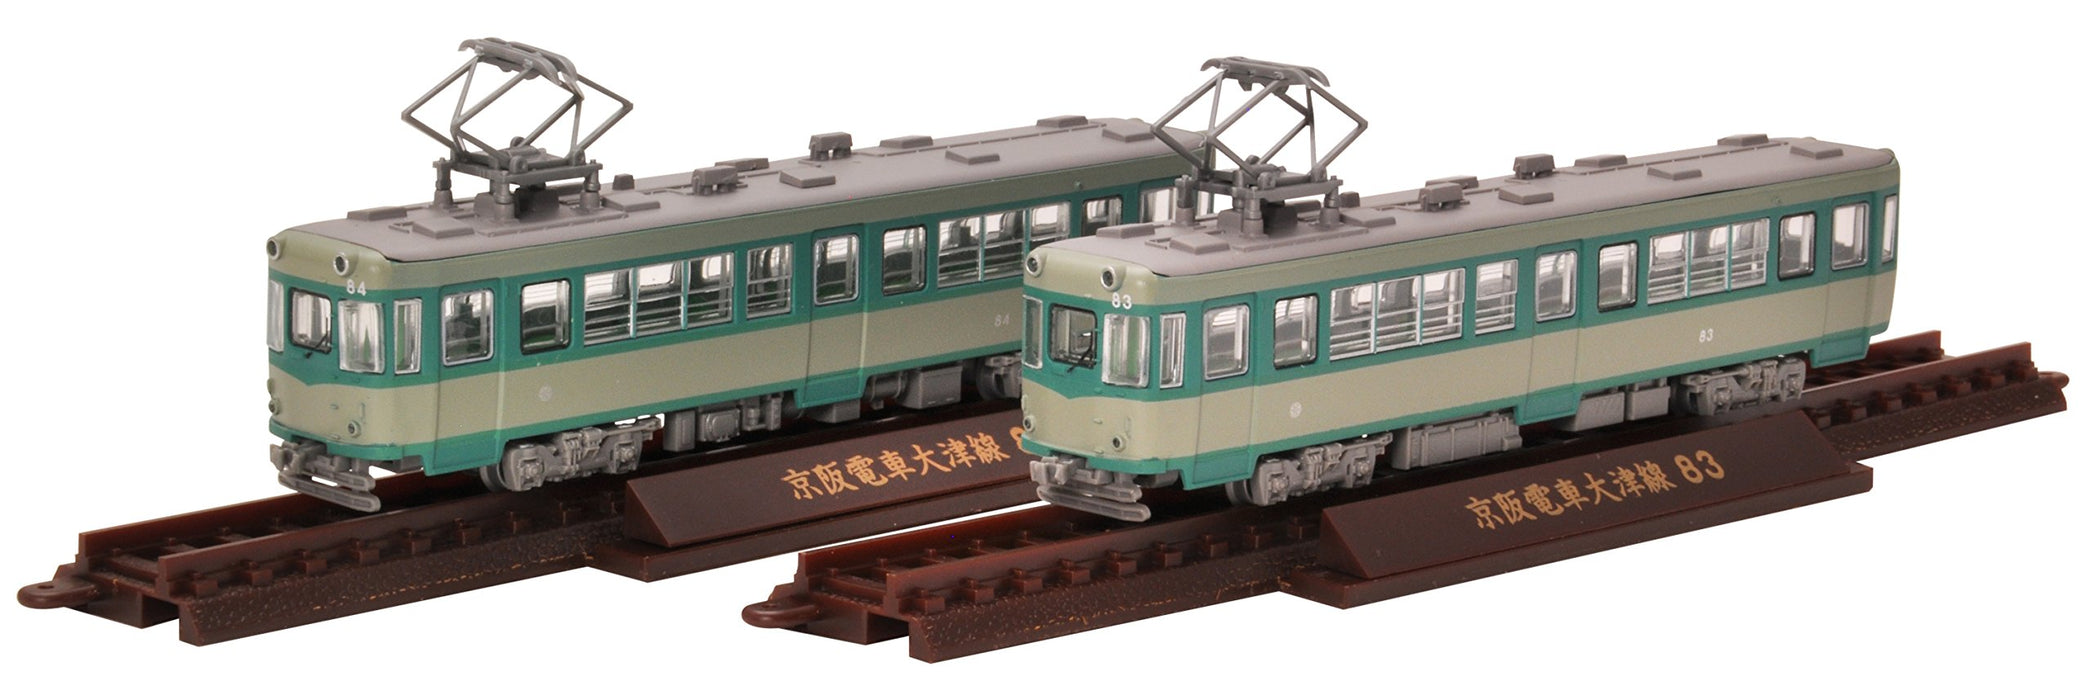 Tomytec Keihan Railway Otsu Line Type 80 Diorama connecté sans climatiseur